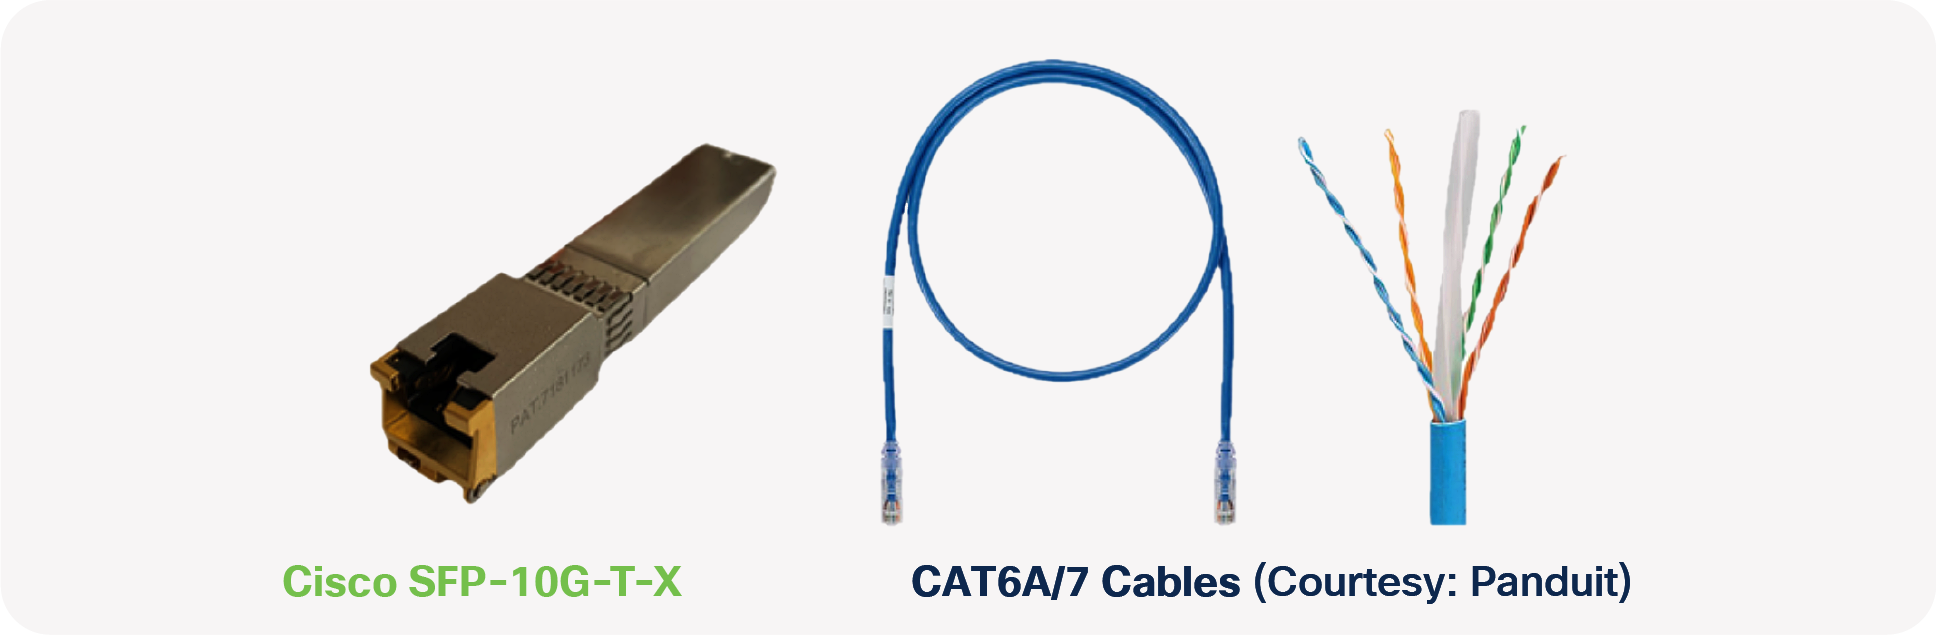 Cisco SFP-10G-T-X & CAT6A/7 Cables